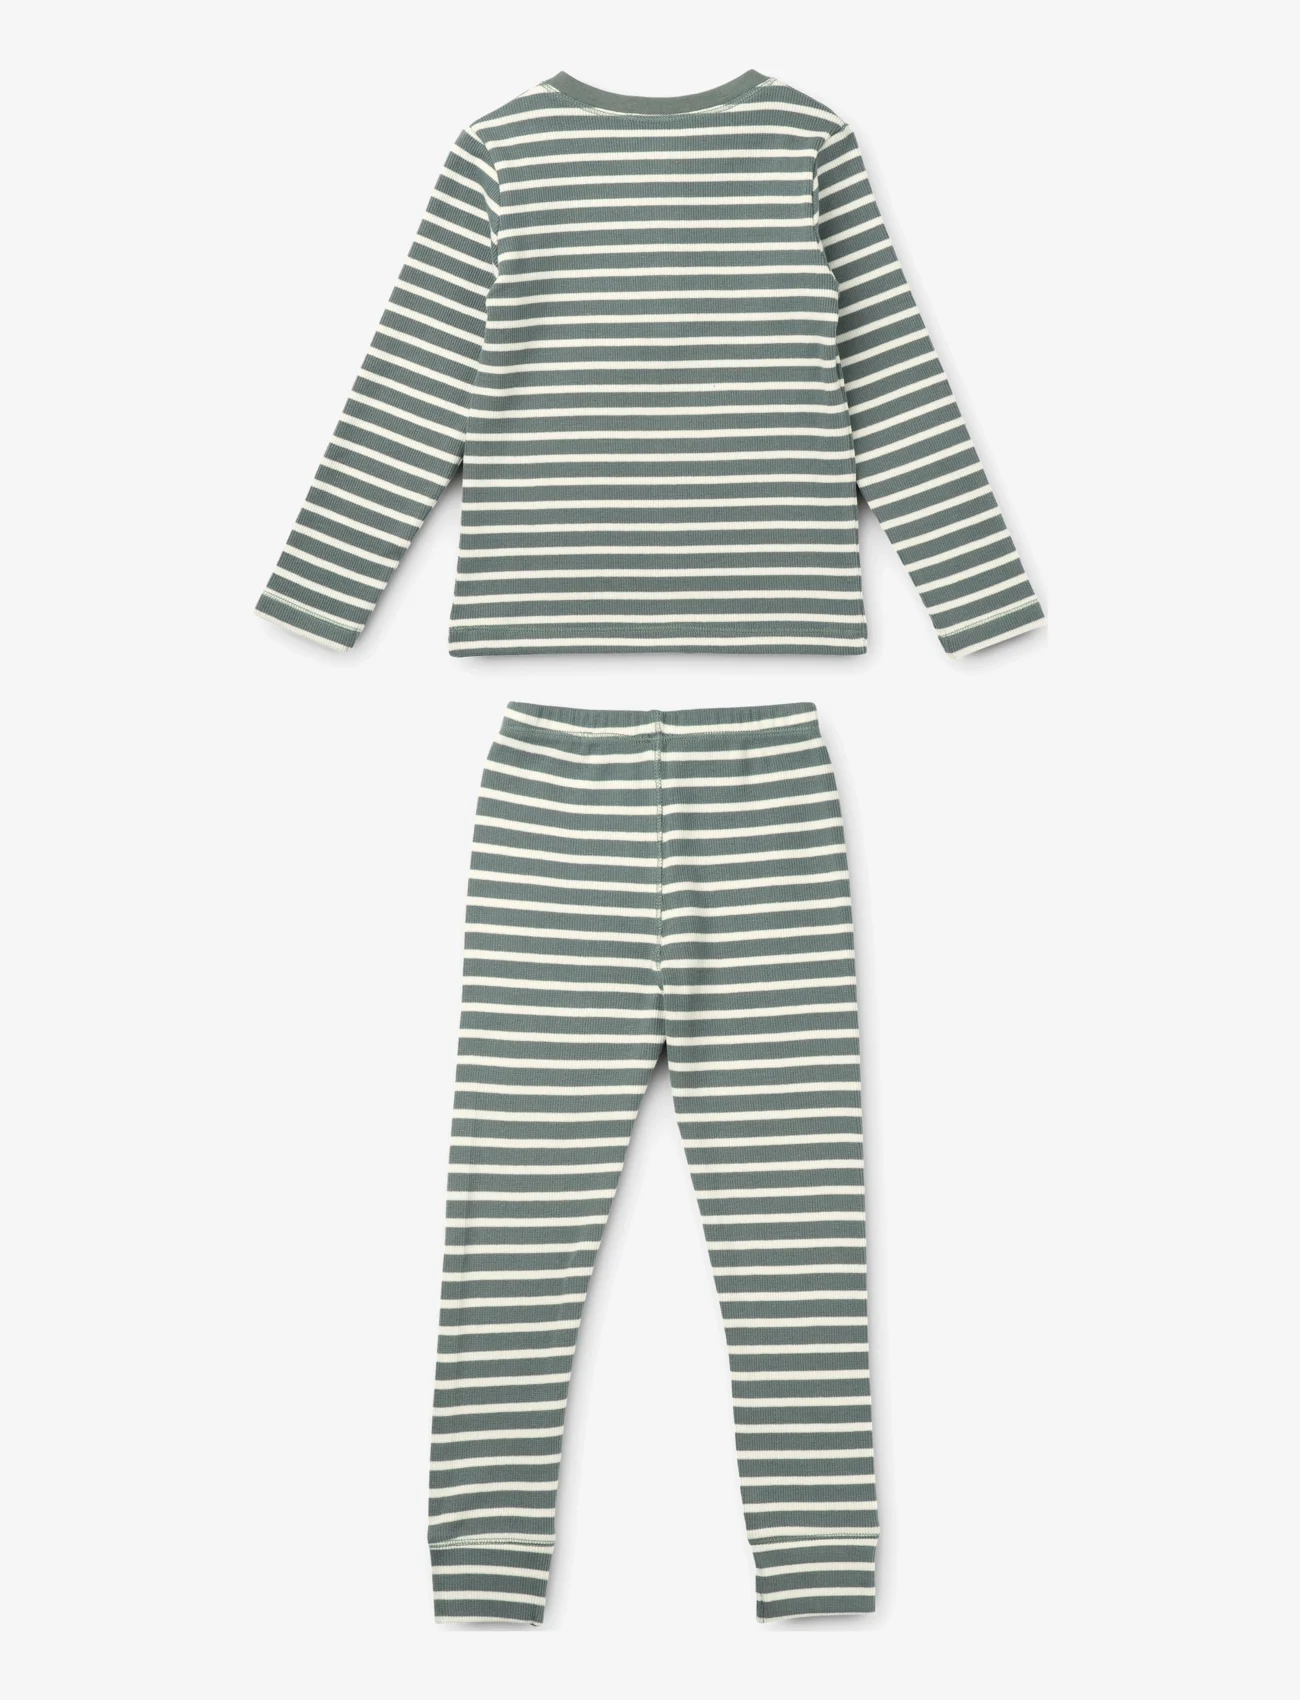 Liewood - Wilhelm pyjamas set - sett - y/d stripe - 1